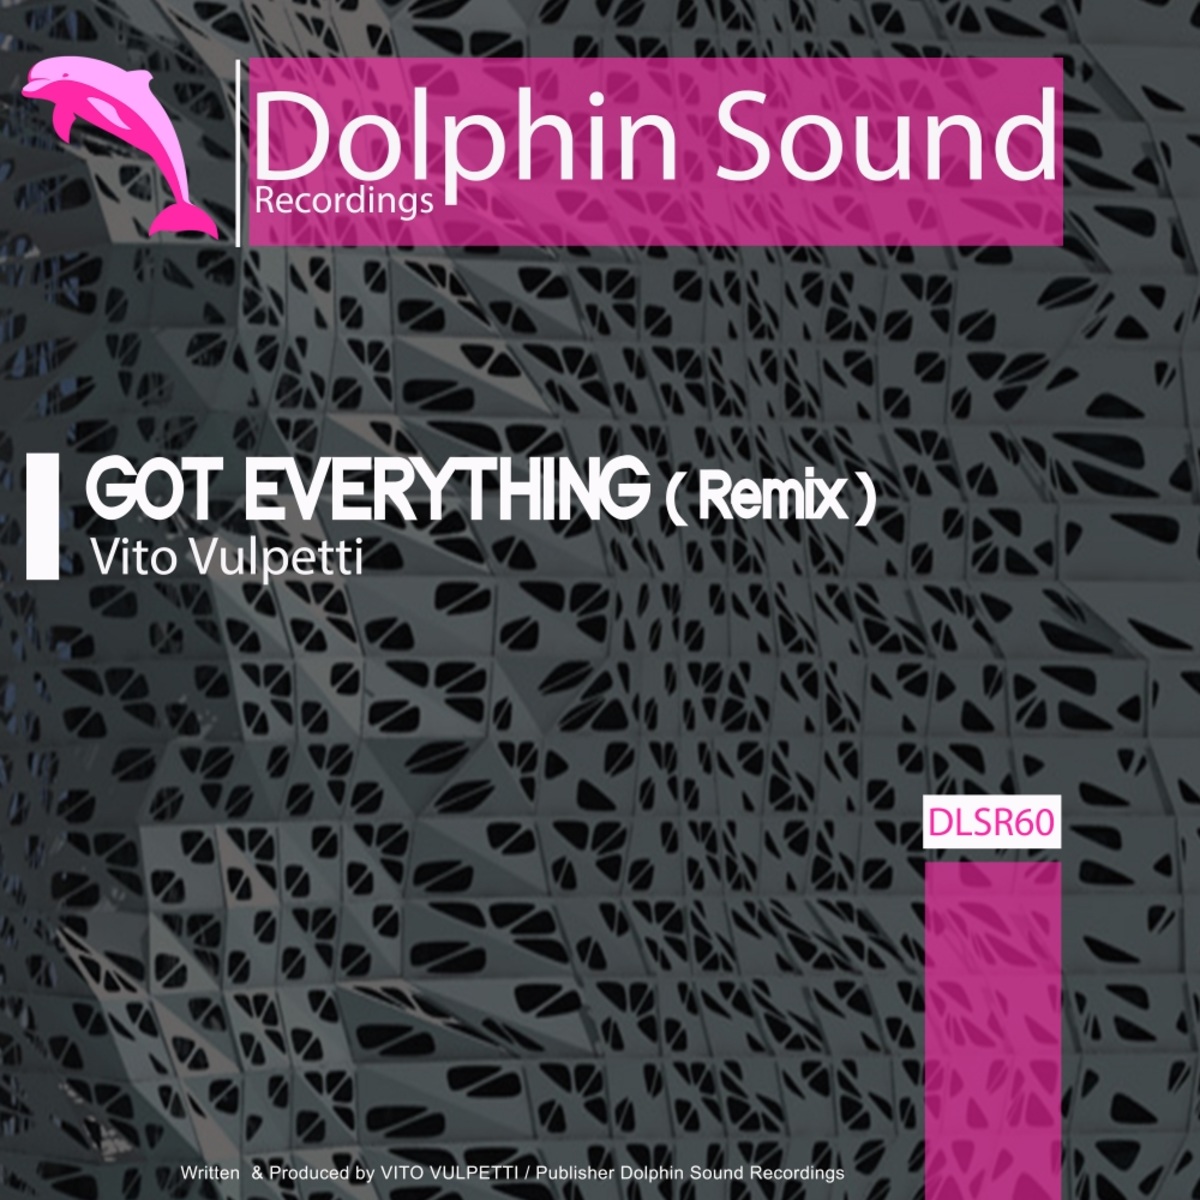 Vito Vulpetti - Got Everything (Vito Vulpetti Remix) / Dolphin Sound Recordings